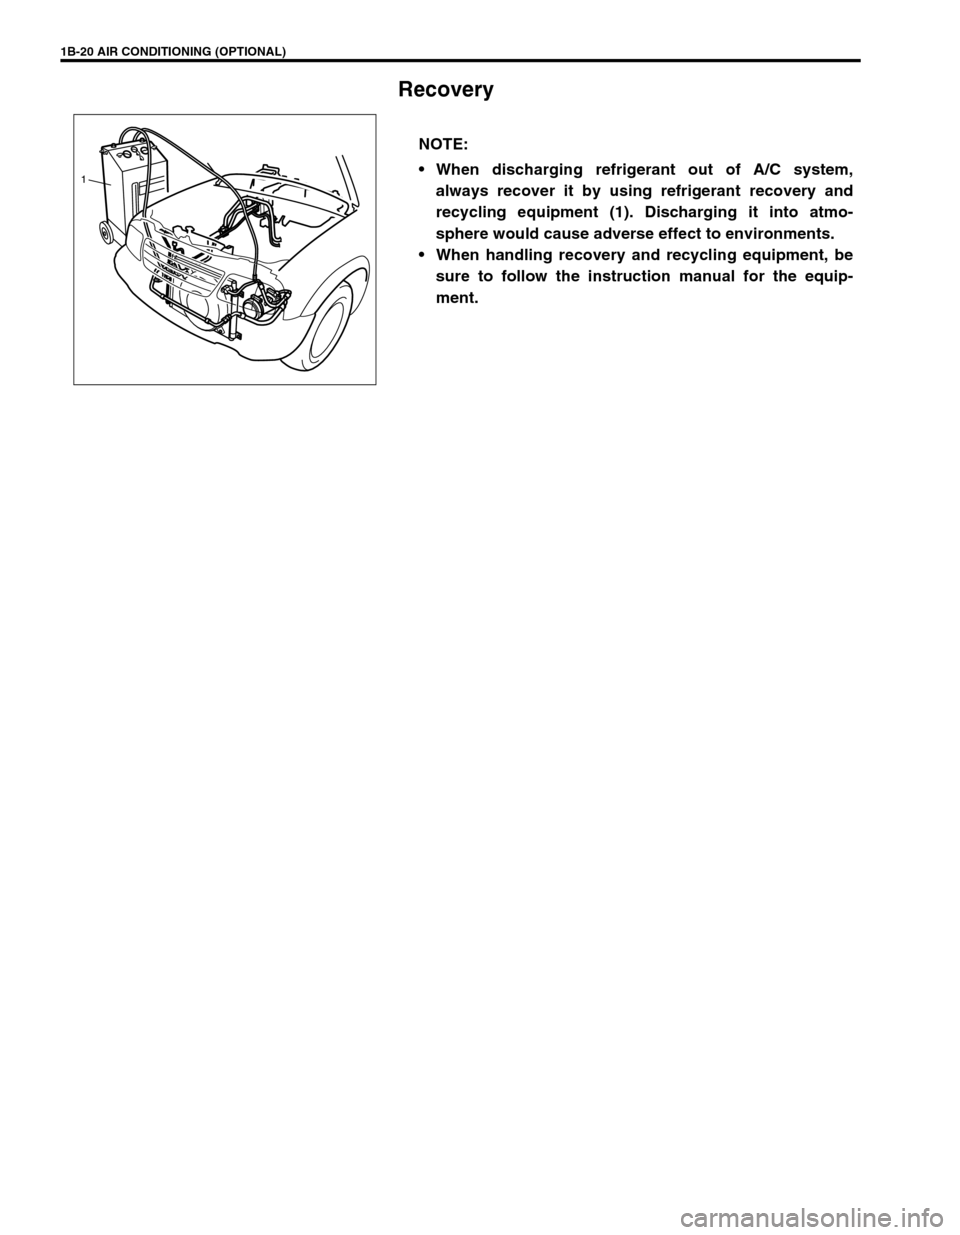 SUZUKI GRAND VITARA 1999 2.G Service Manual 1B-20 AIR CONDITIONING (OPTIONAL)
Recovery
NOTE:
When discharging refrigerant out of A/C system,
always recover it by using refrigerant recovery and
recycling equipment (1). Discharging it into atmo-